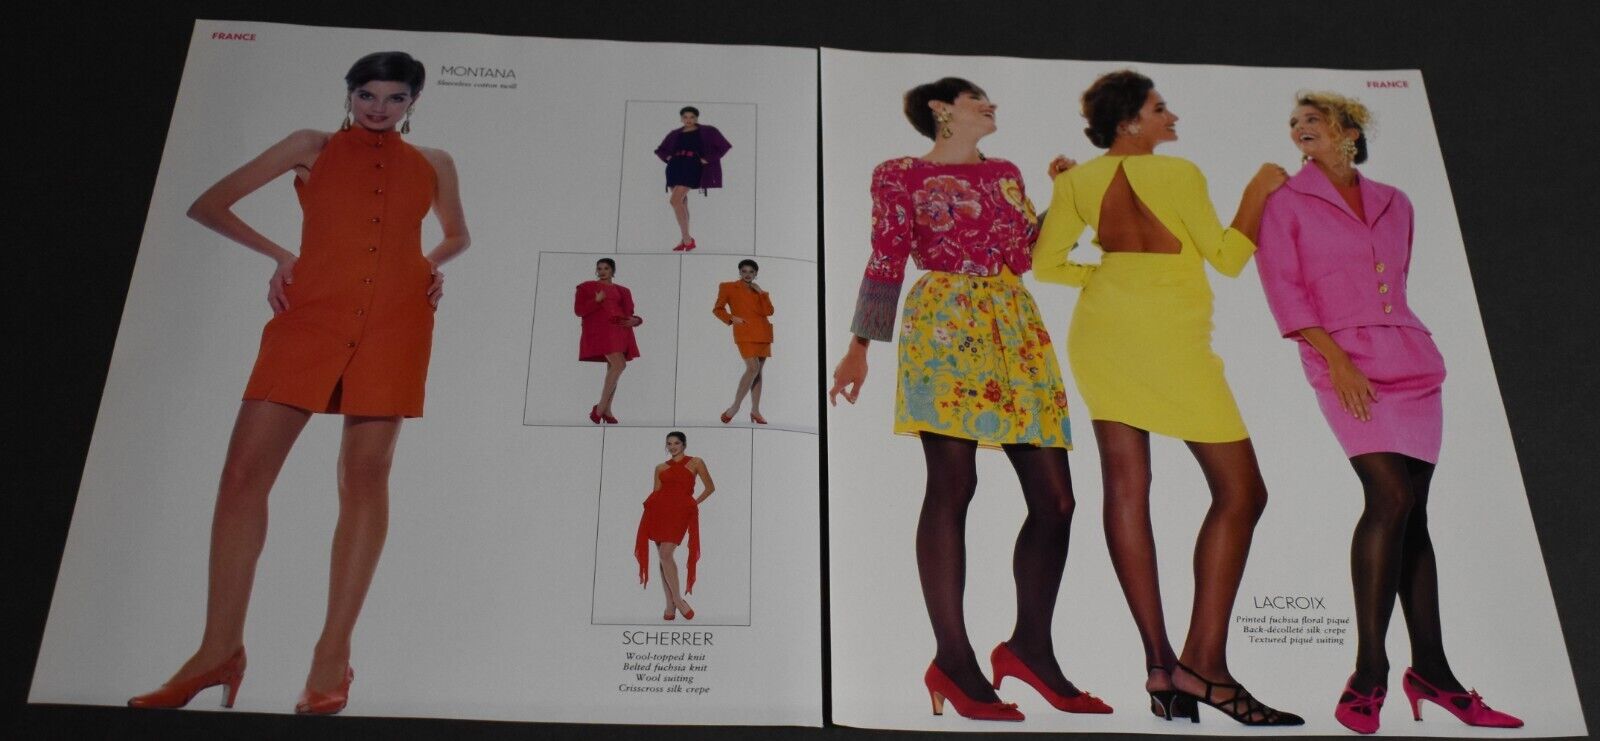 1991 Print Ad Heels Fashion Style Lady Long Legs Sexy Dress Scherrer Ungaro art